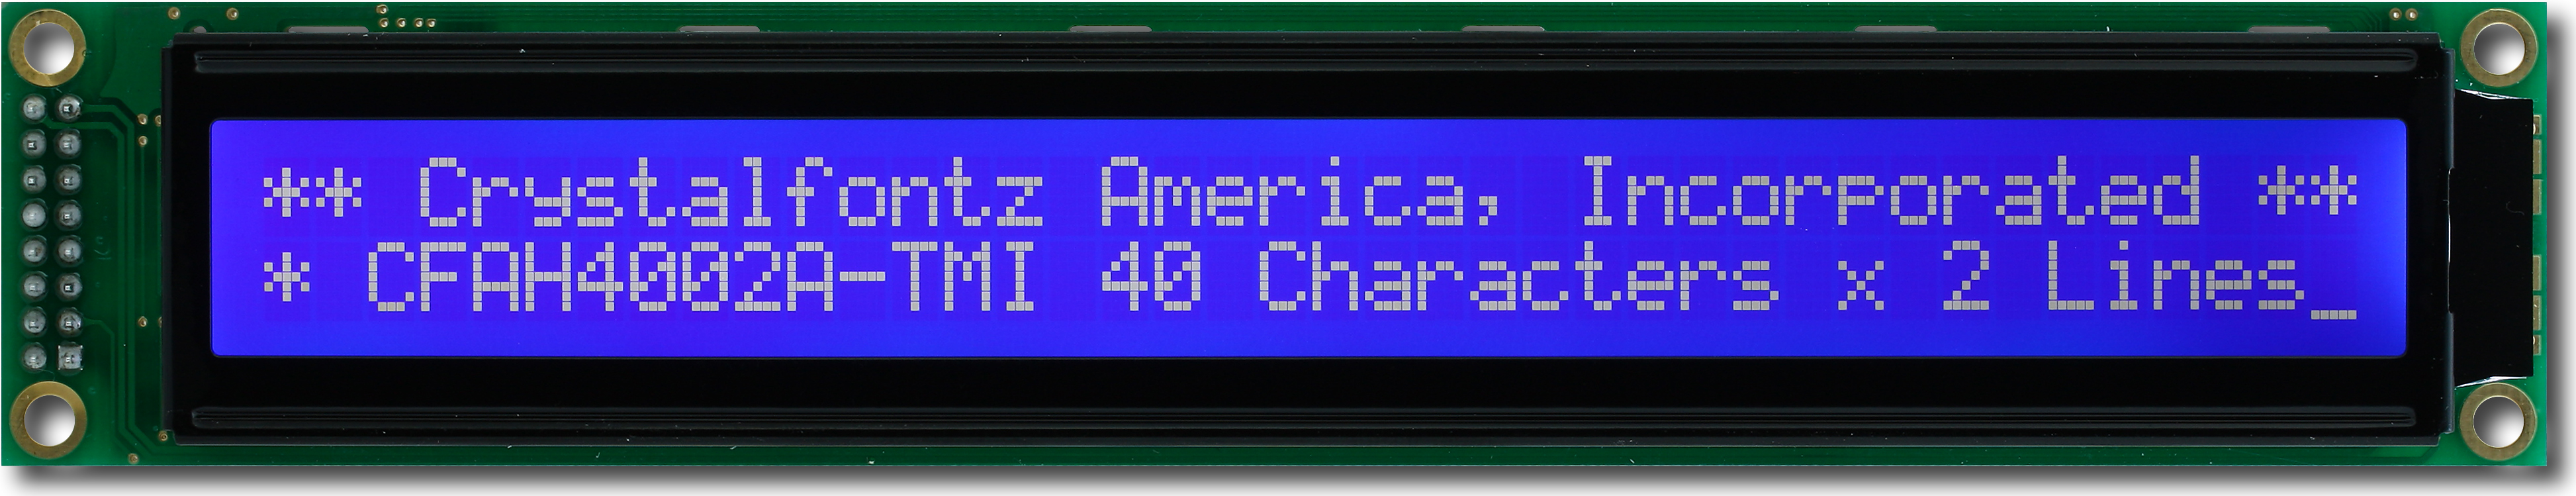 40x2 Character LCD Module